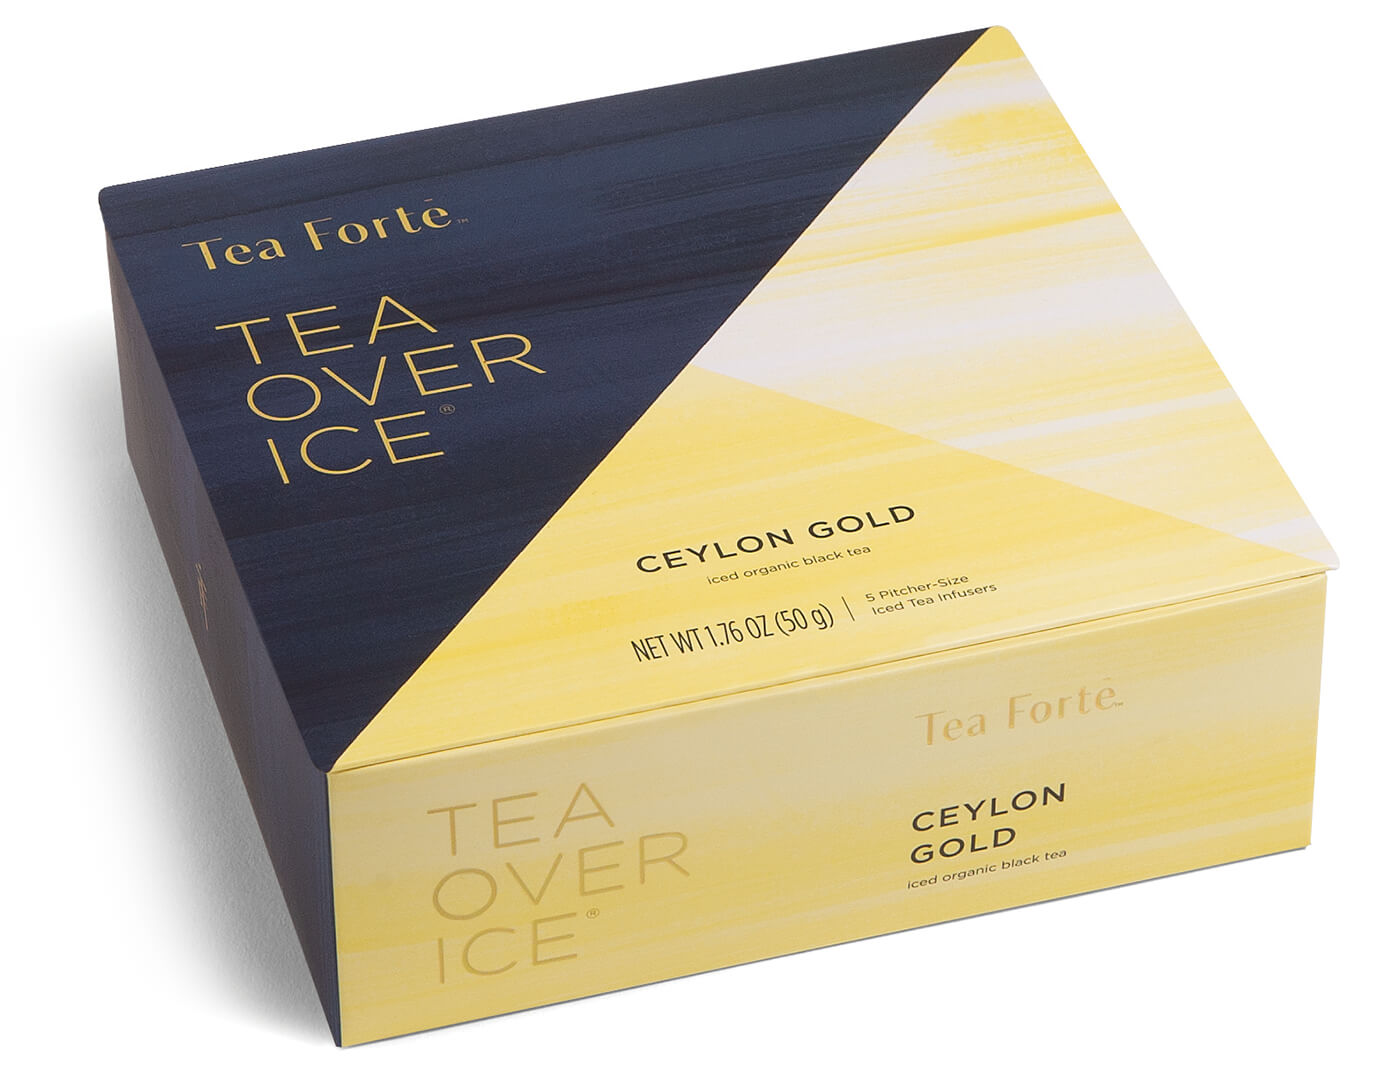 Tea Over Ice Ceylon Gold 5pk, lid closed